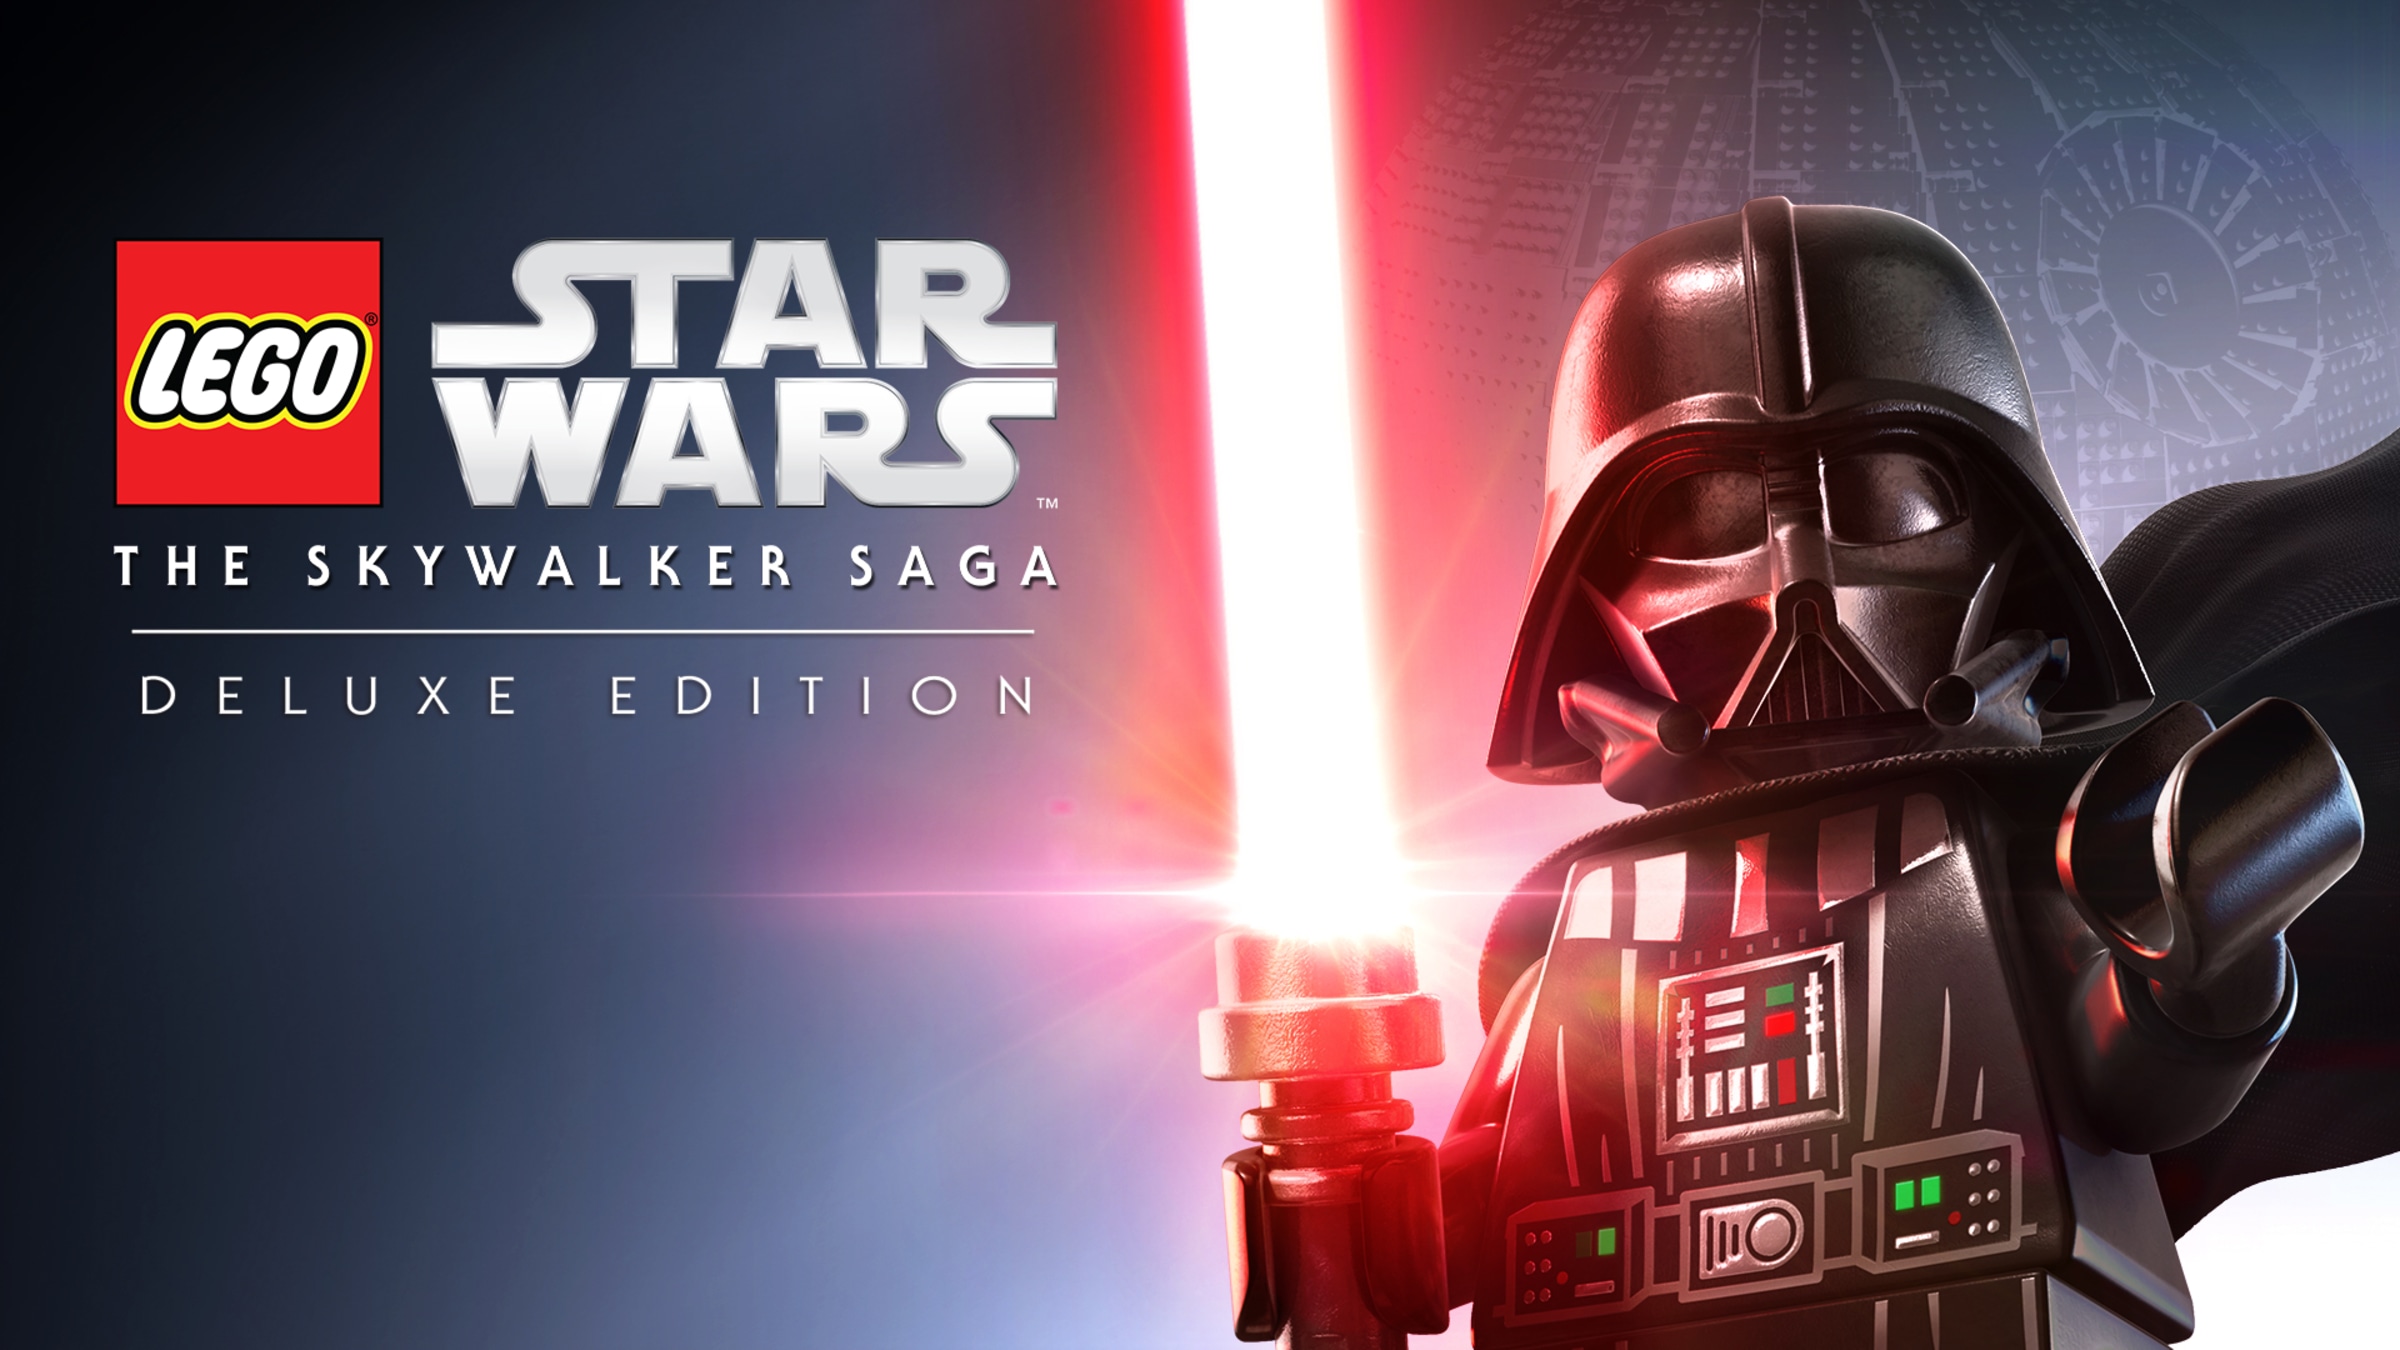 LEGO Star Wars: The Skywalker Saga - For Nintendo Switch